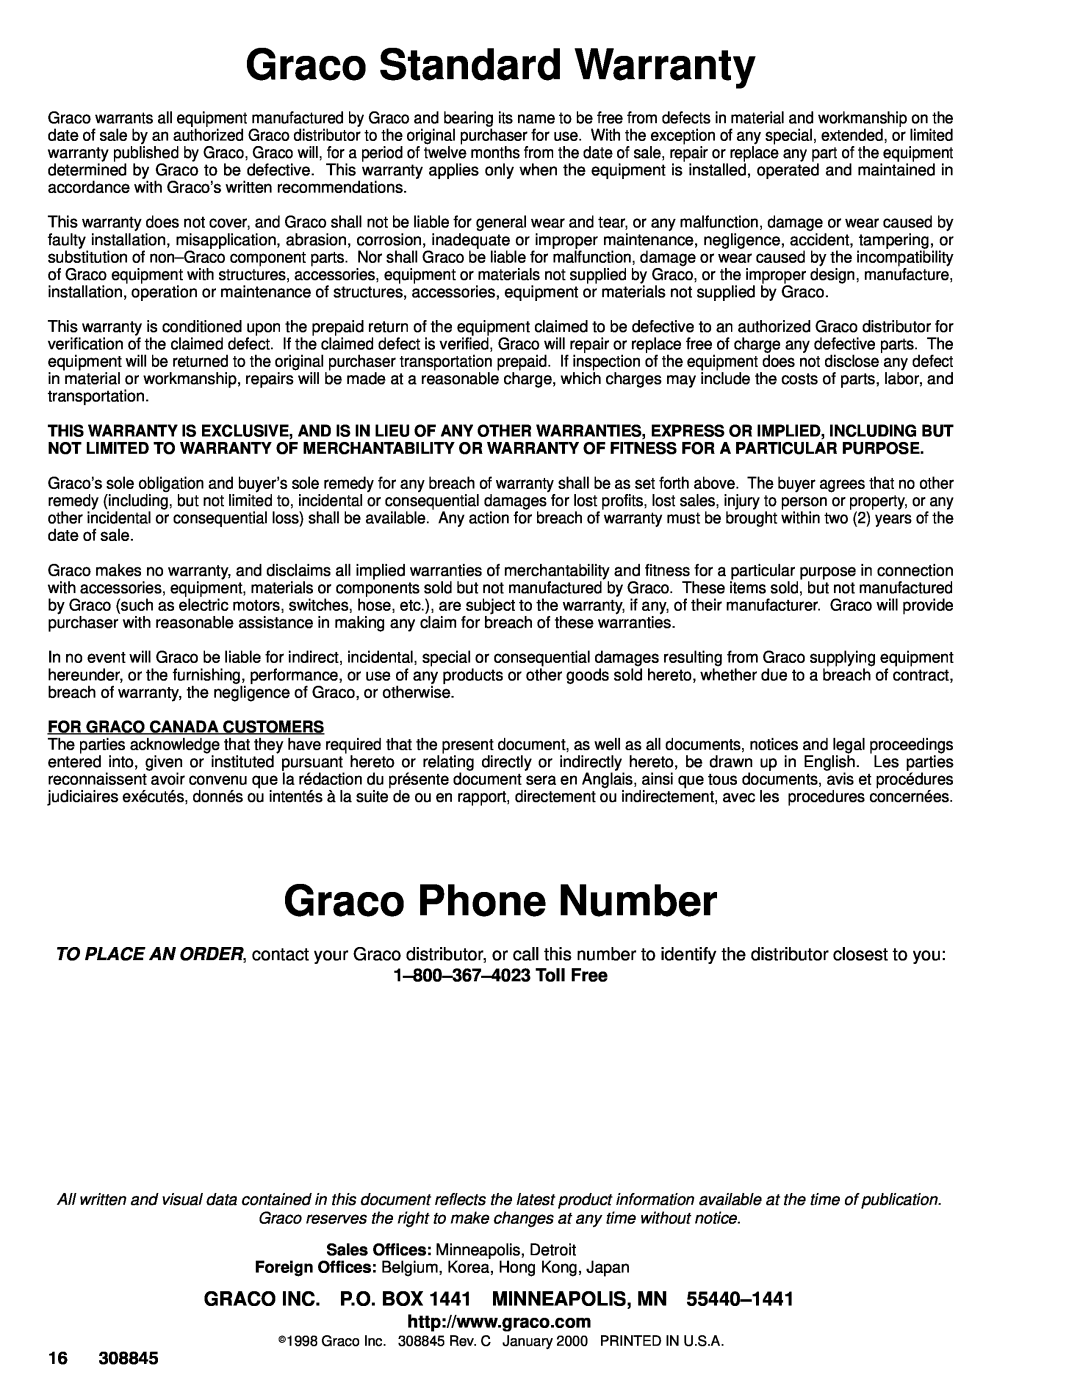 Graco Inc 240-363, 240-351, 240-352 Graco Standard Warranty, Graco Phone Number, GRACO INC. P.O. BOX 1441 MINNEAPOLIS, MN 